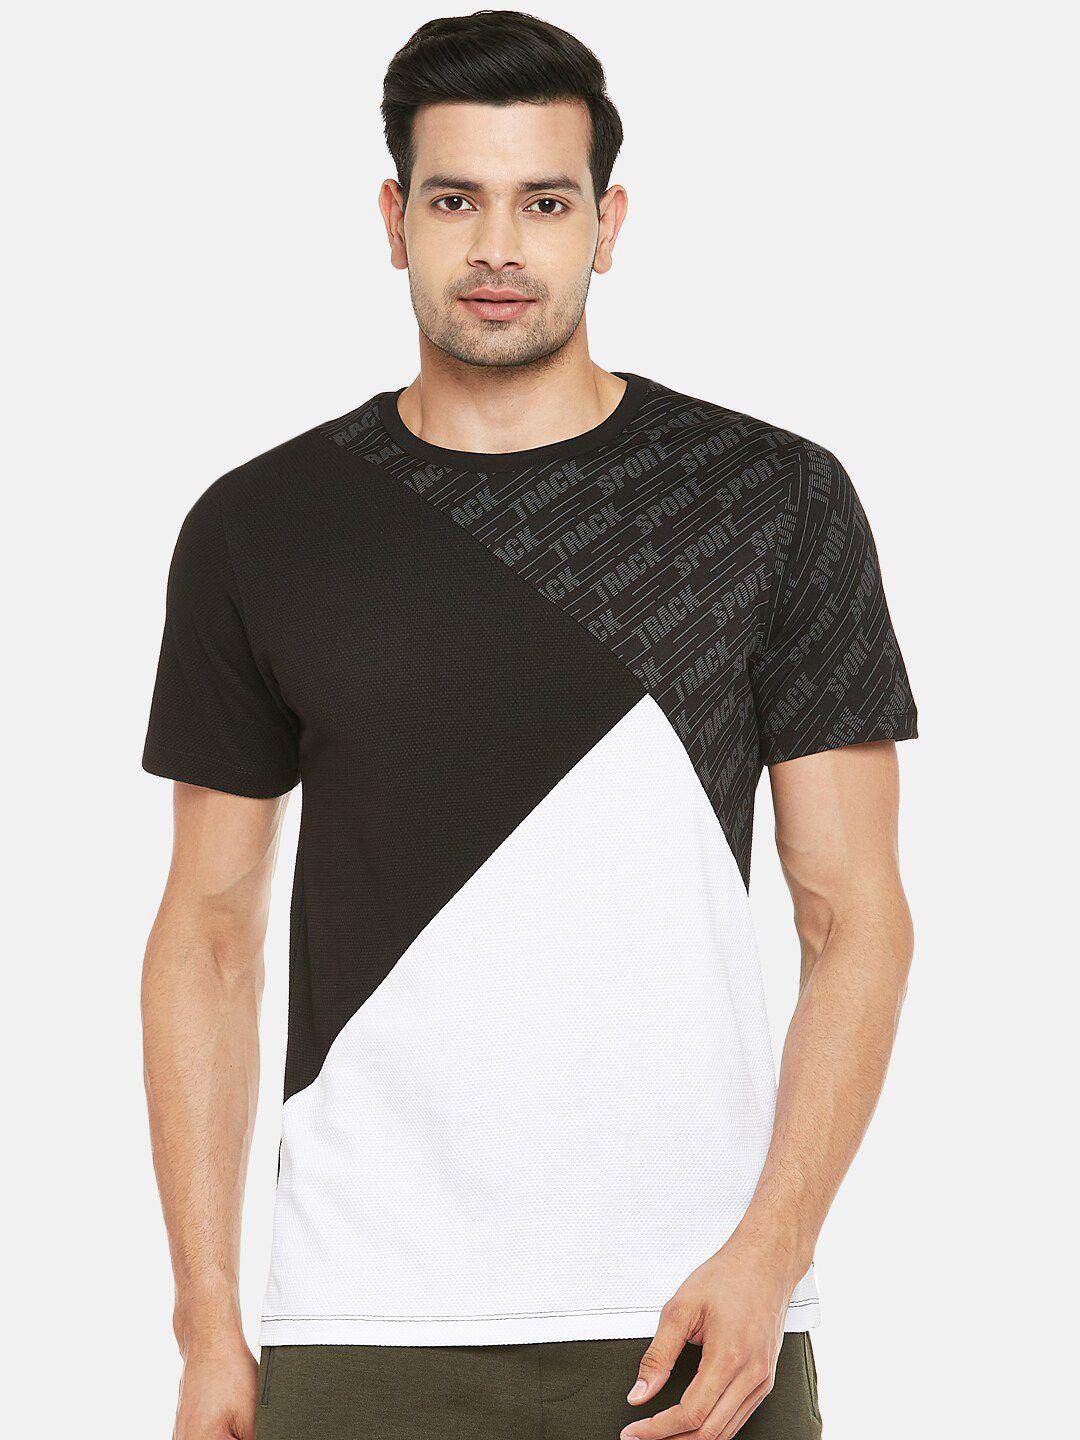 ajile by pantaloons men white  black colourblocked slim fit pure cotton t-shirt